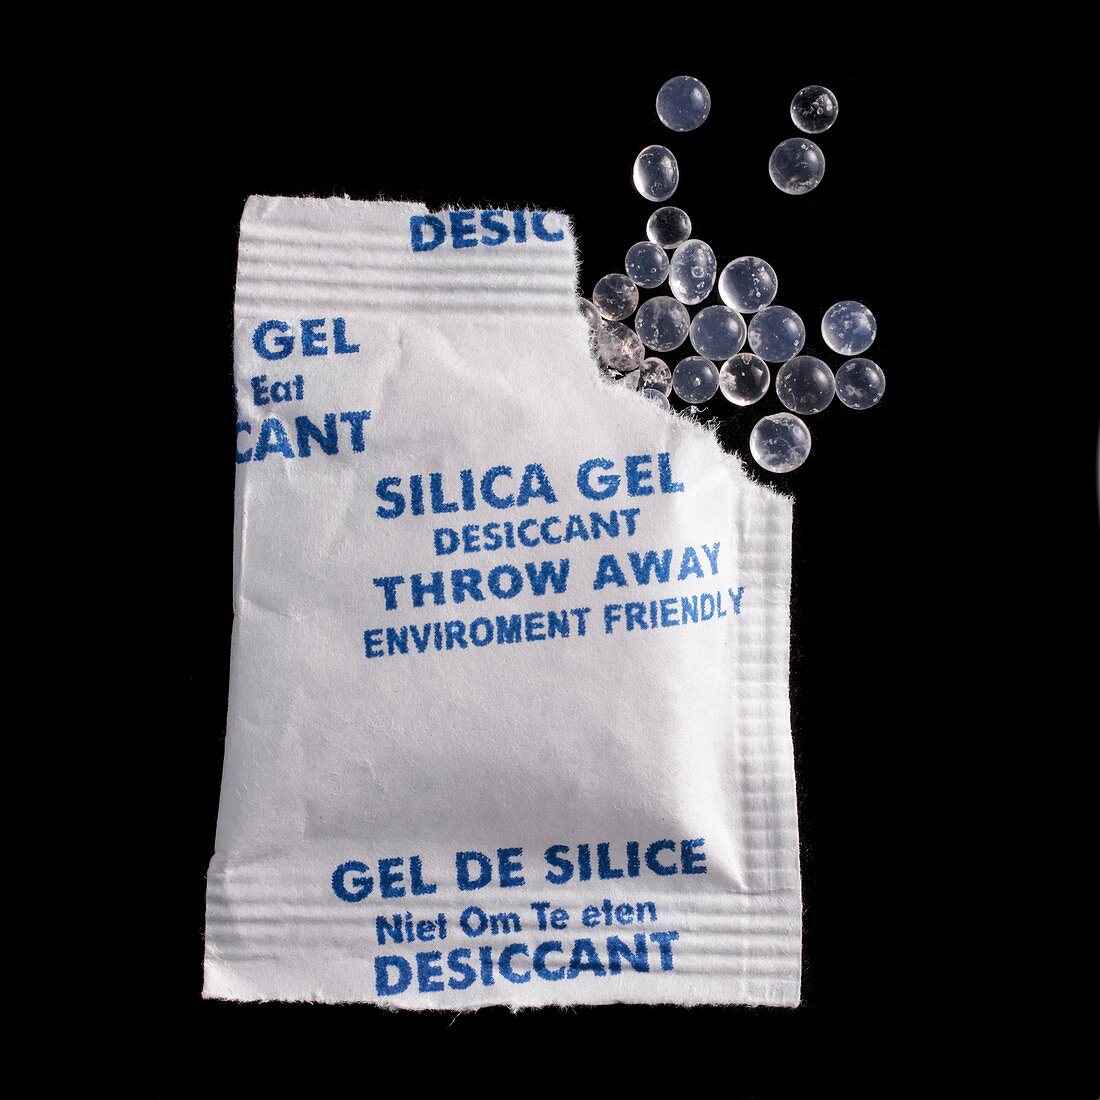 Bag of silica gel desiccant